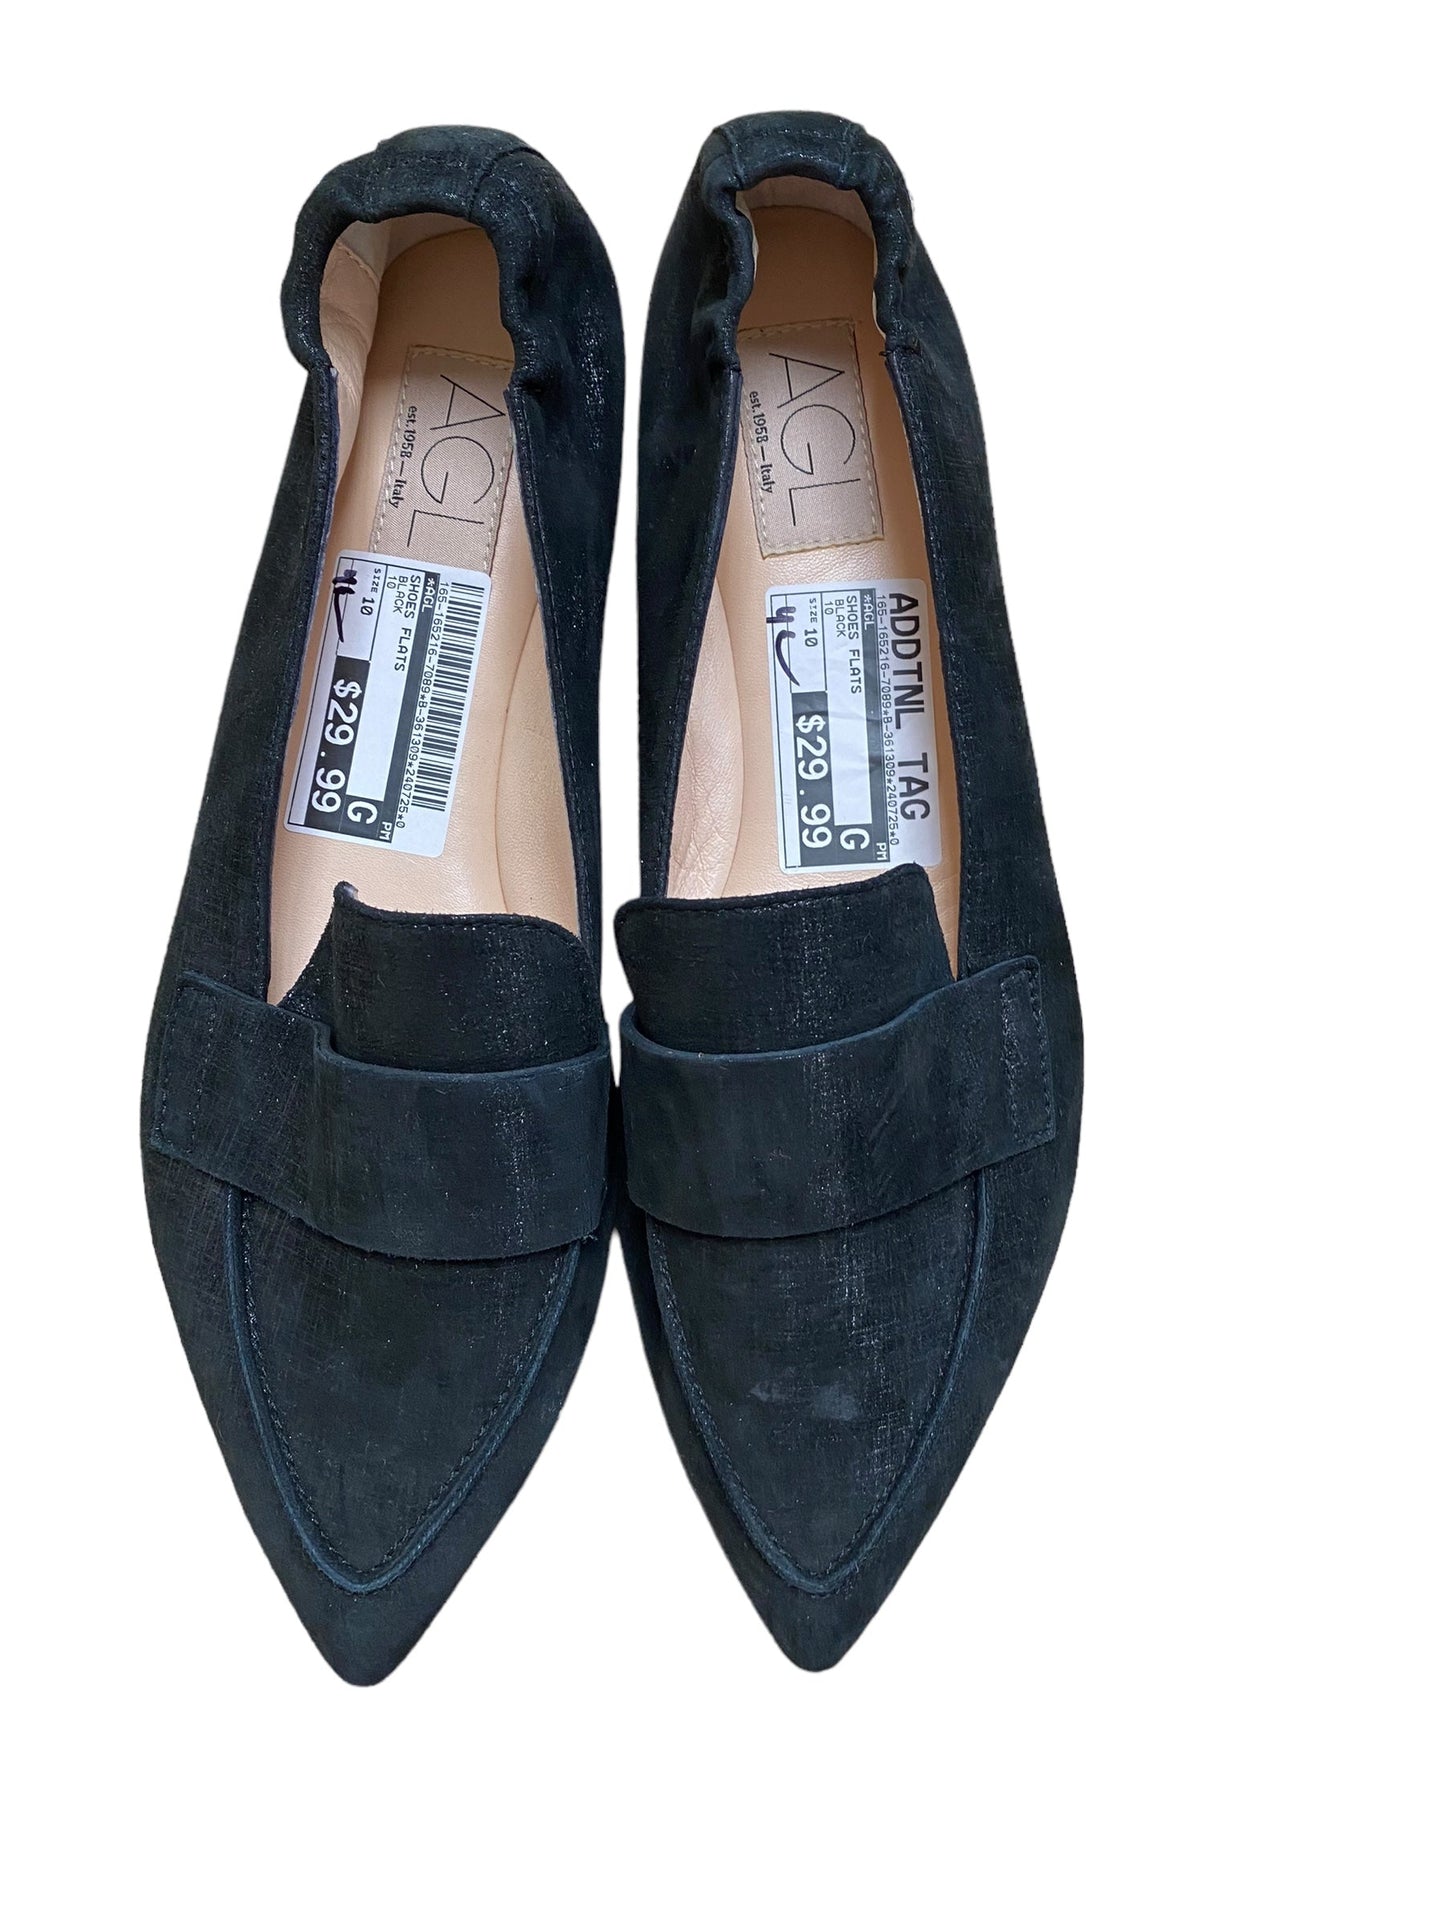 Black Shoes Flats Agl, Size 10